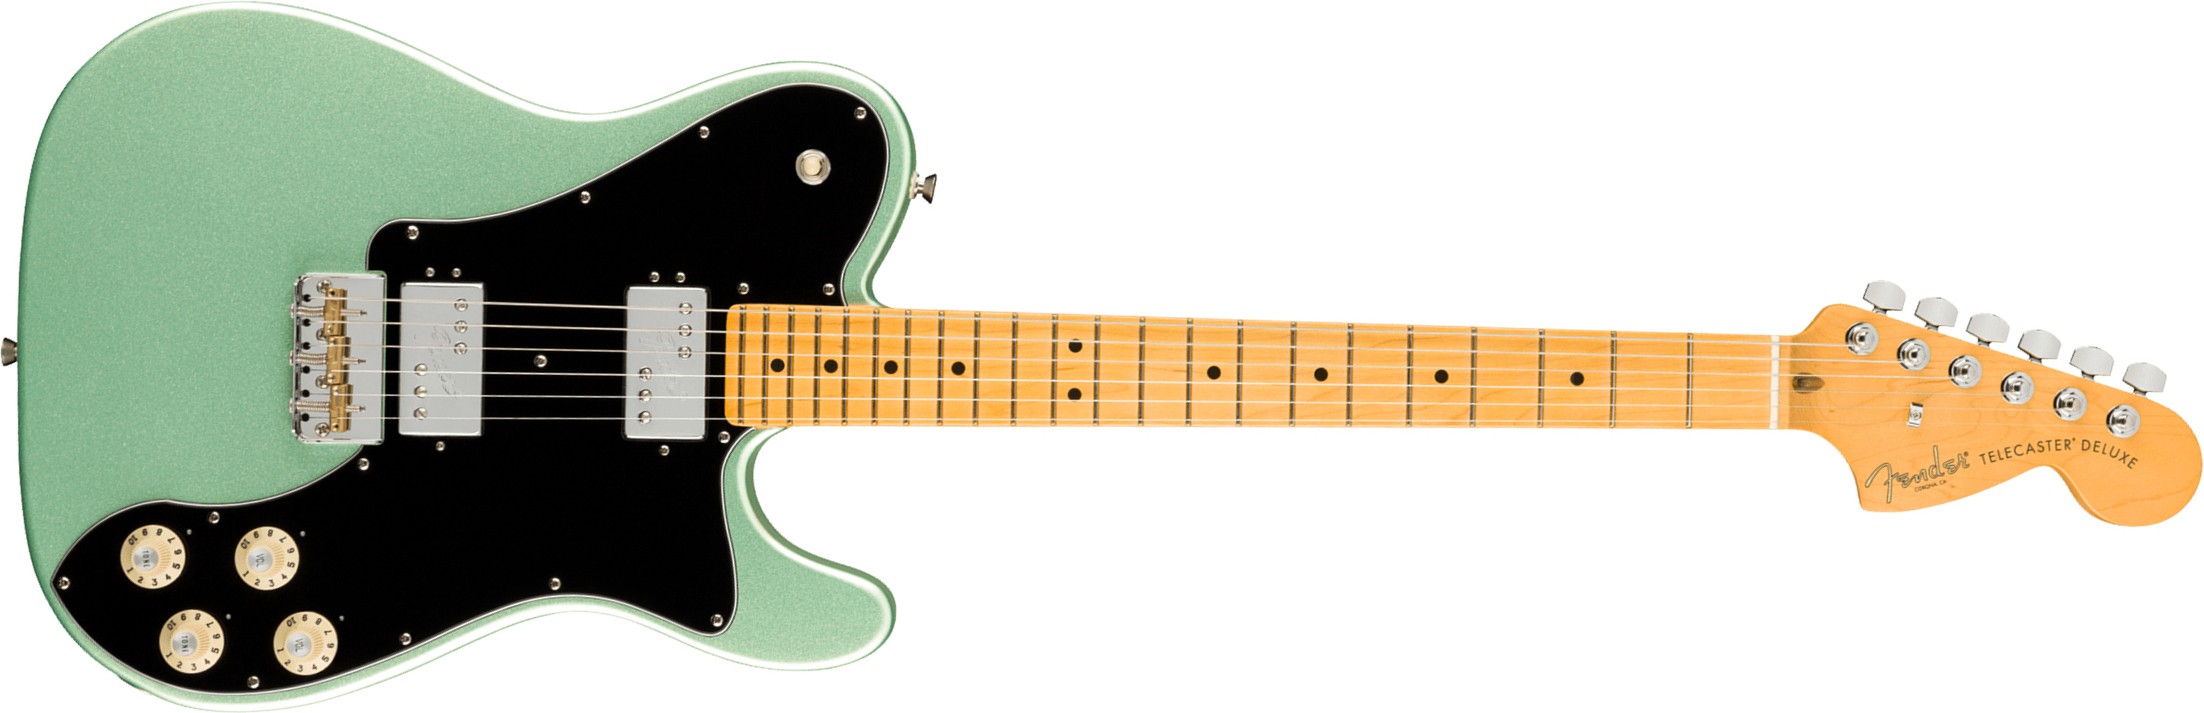 Fender Tele Deluxe American Professional Ii Usa Mn - Mystic Surf Green - E-Gitarre in Teleform - Main picture